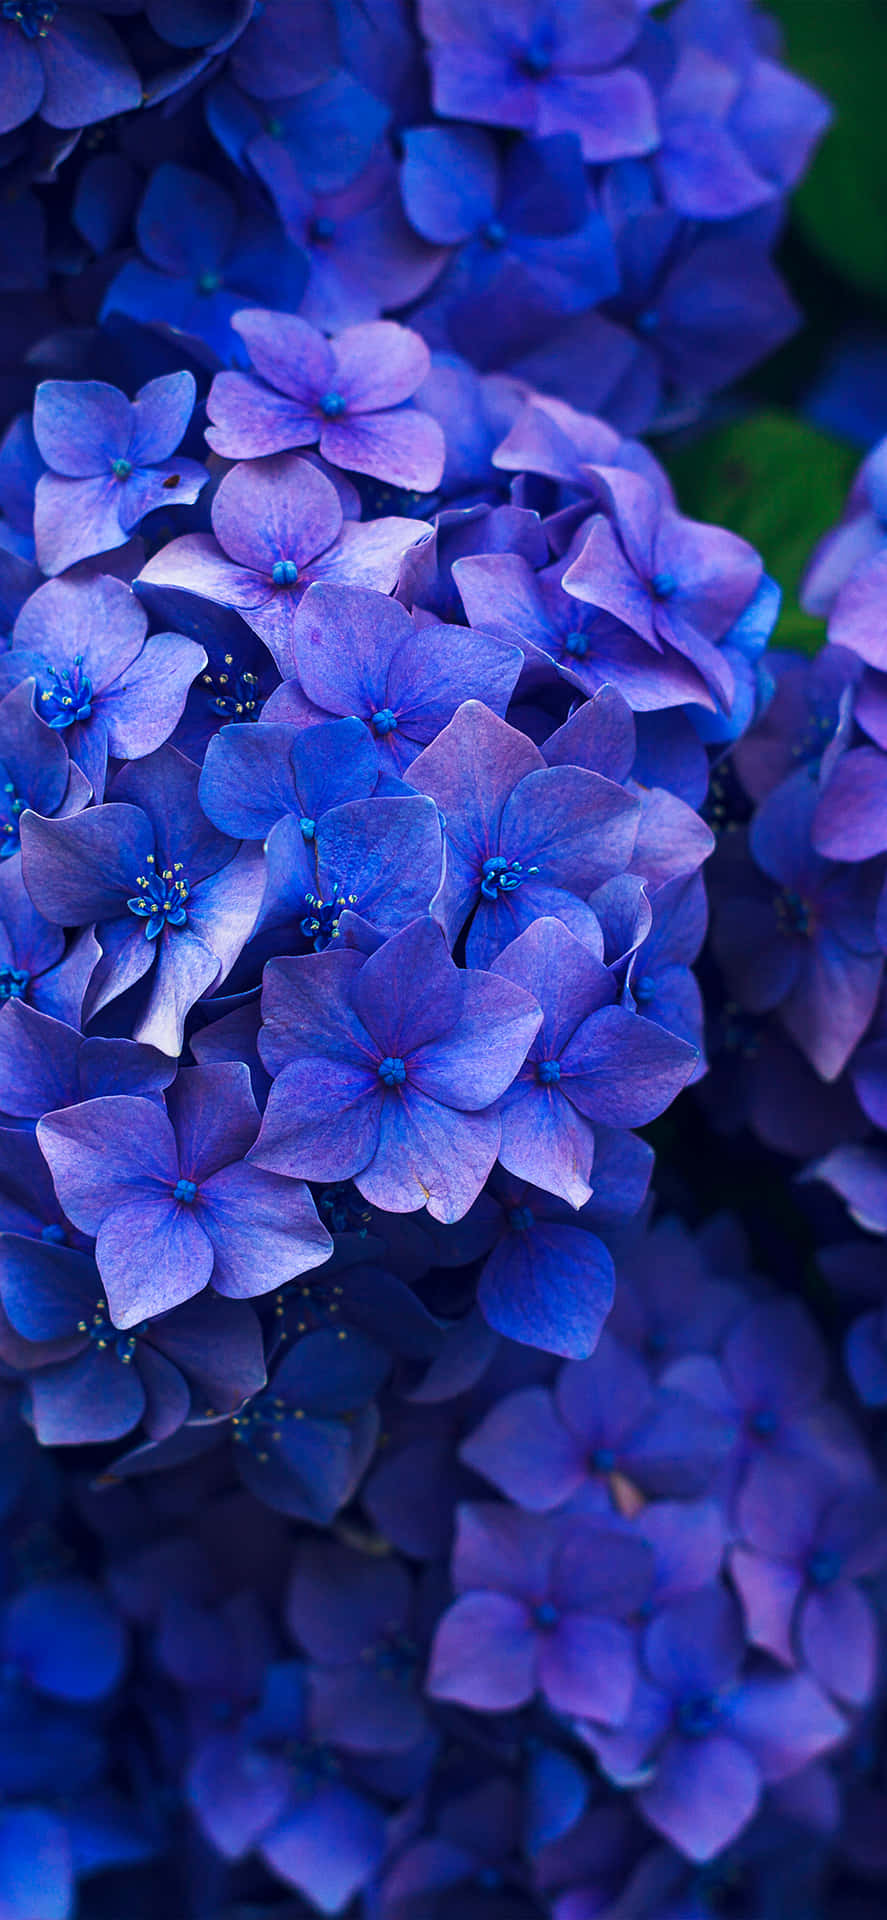 Imagende Hortensias De Color Azul Oscuro